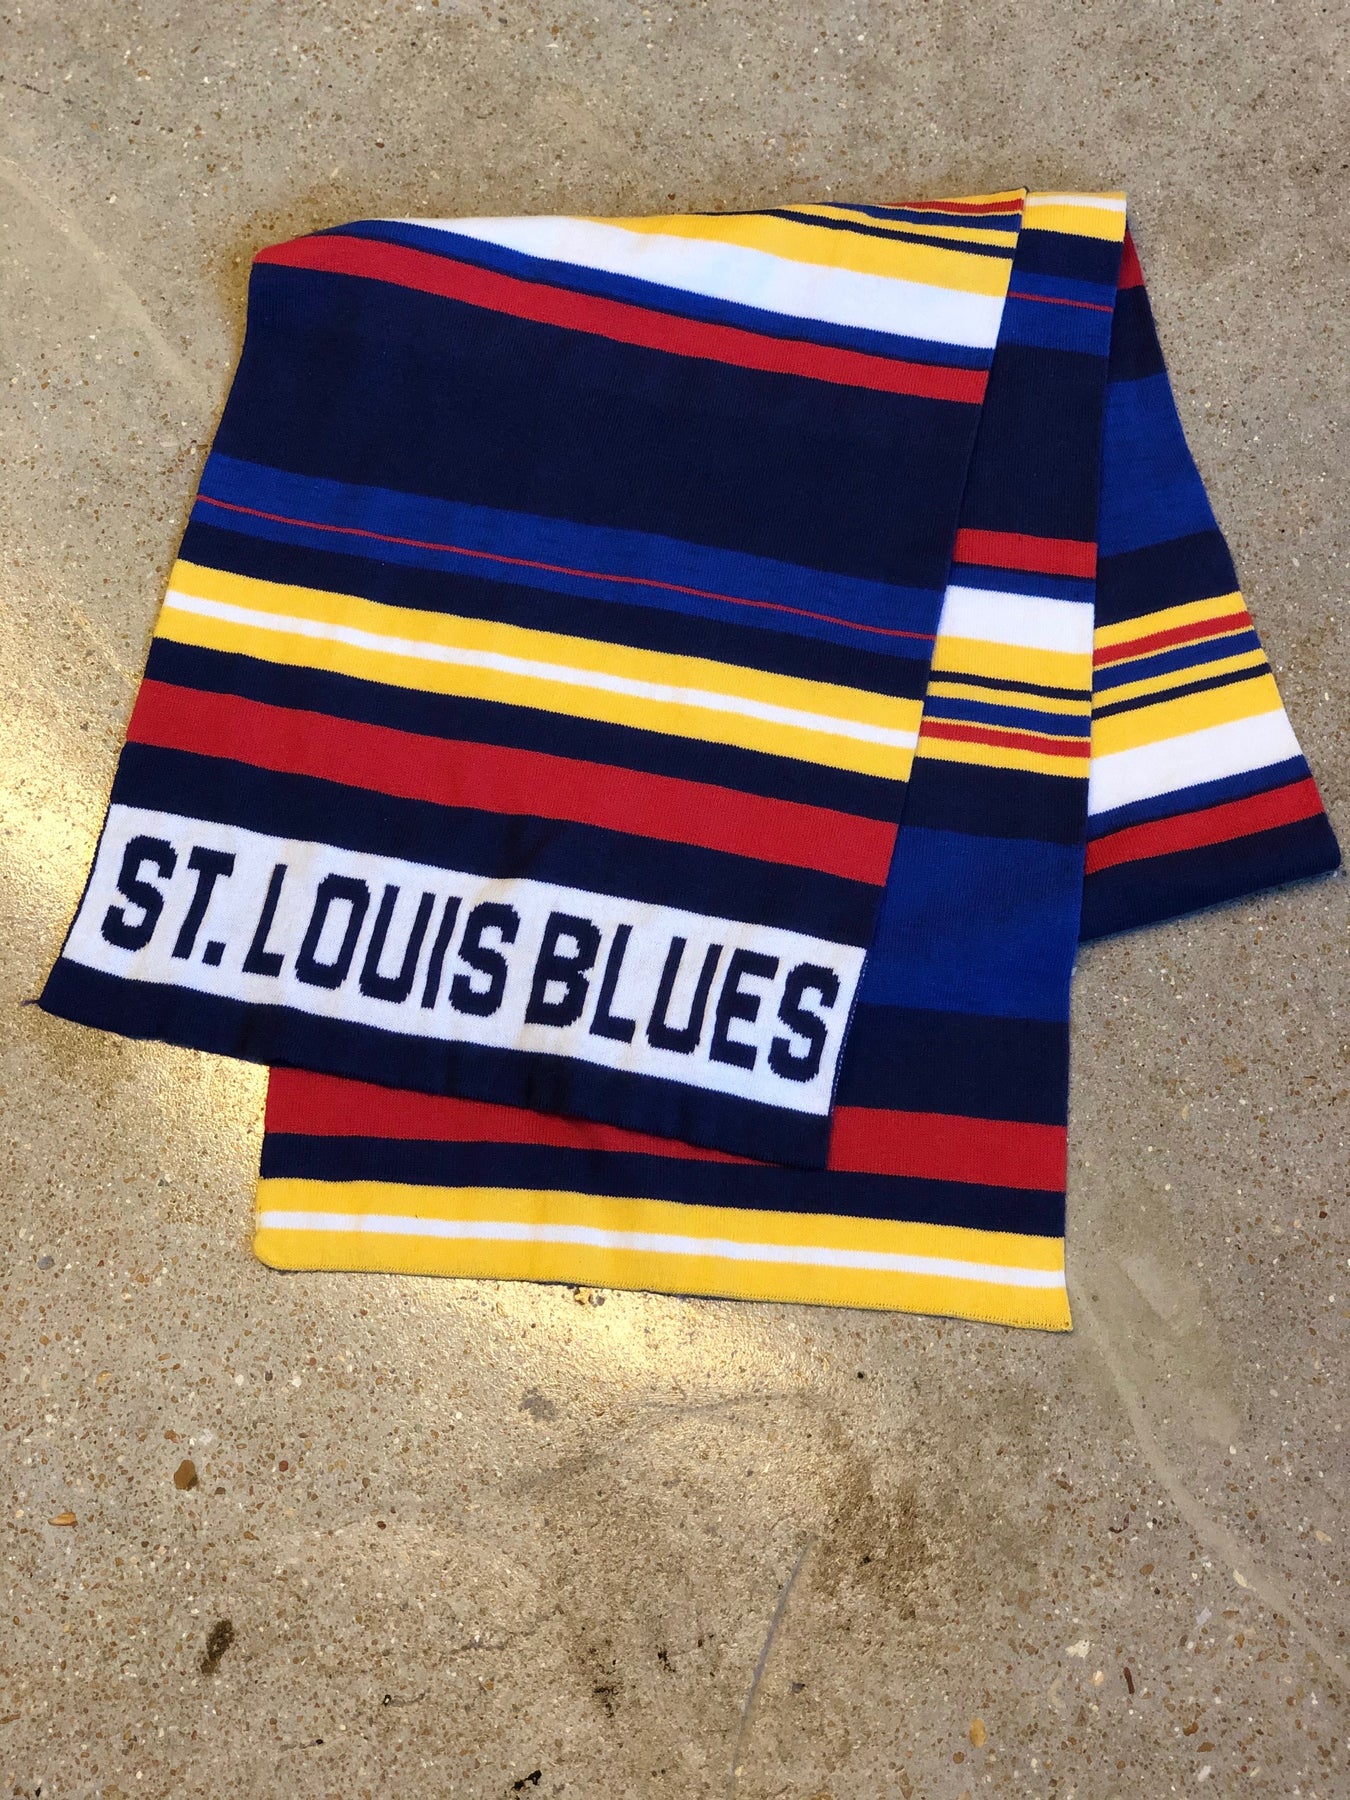 St Louis Blues Scarf 